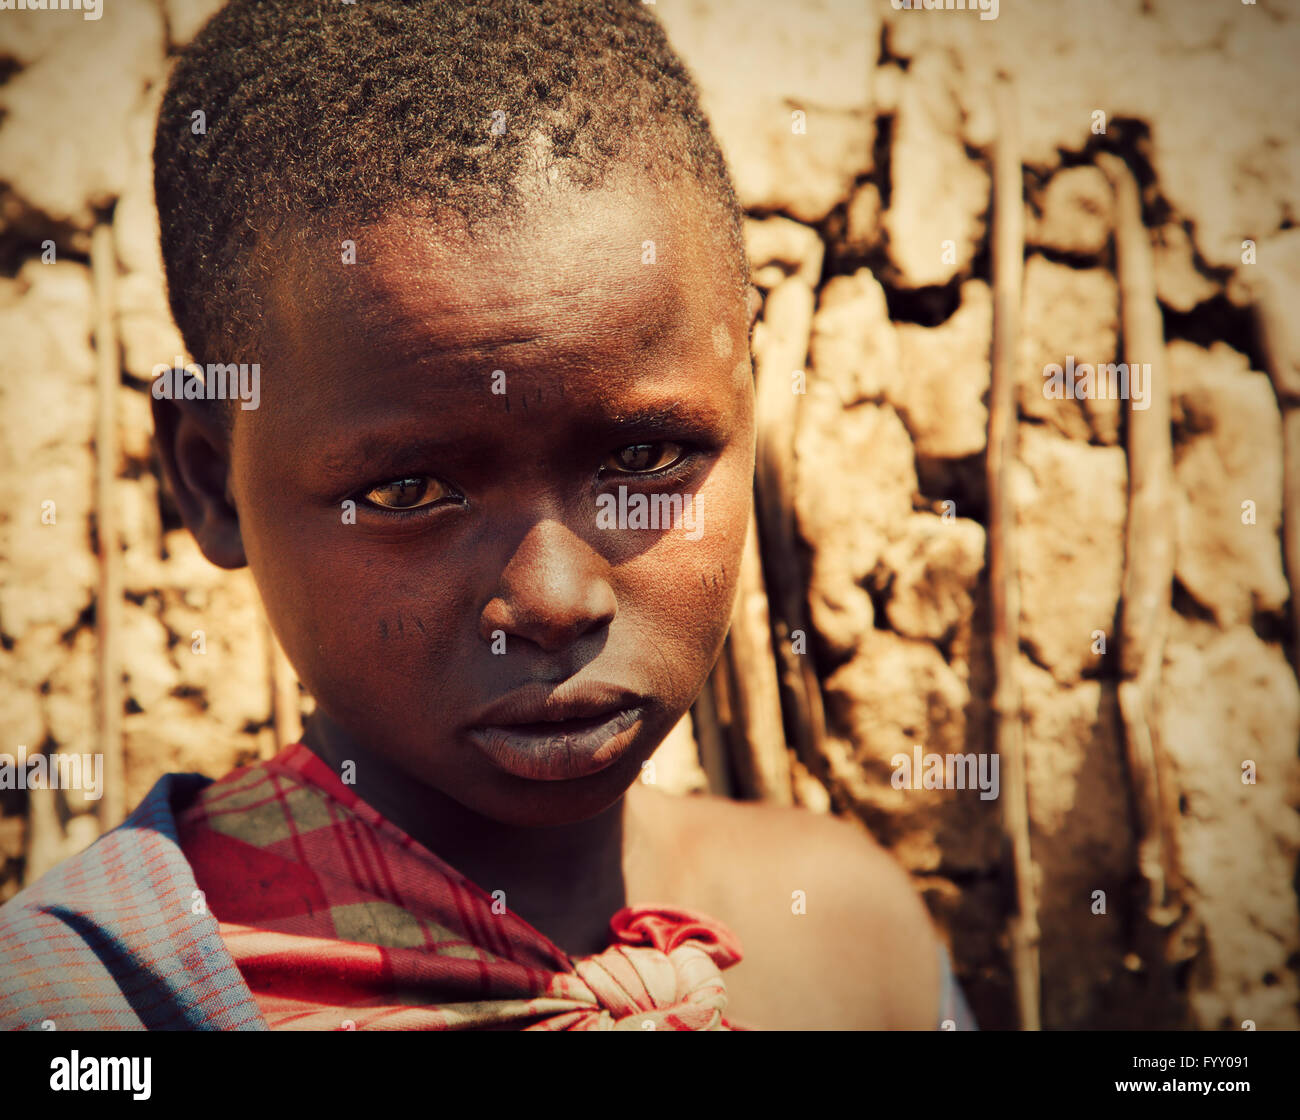 Maasai child portrait in Tanzania, Africa Stock Photo